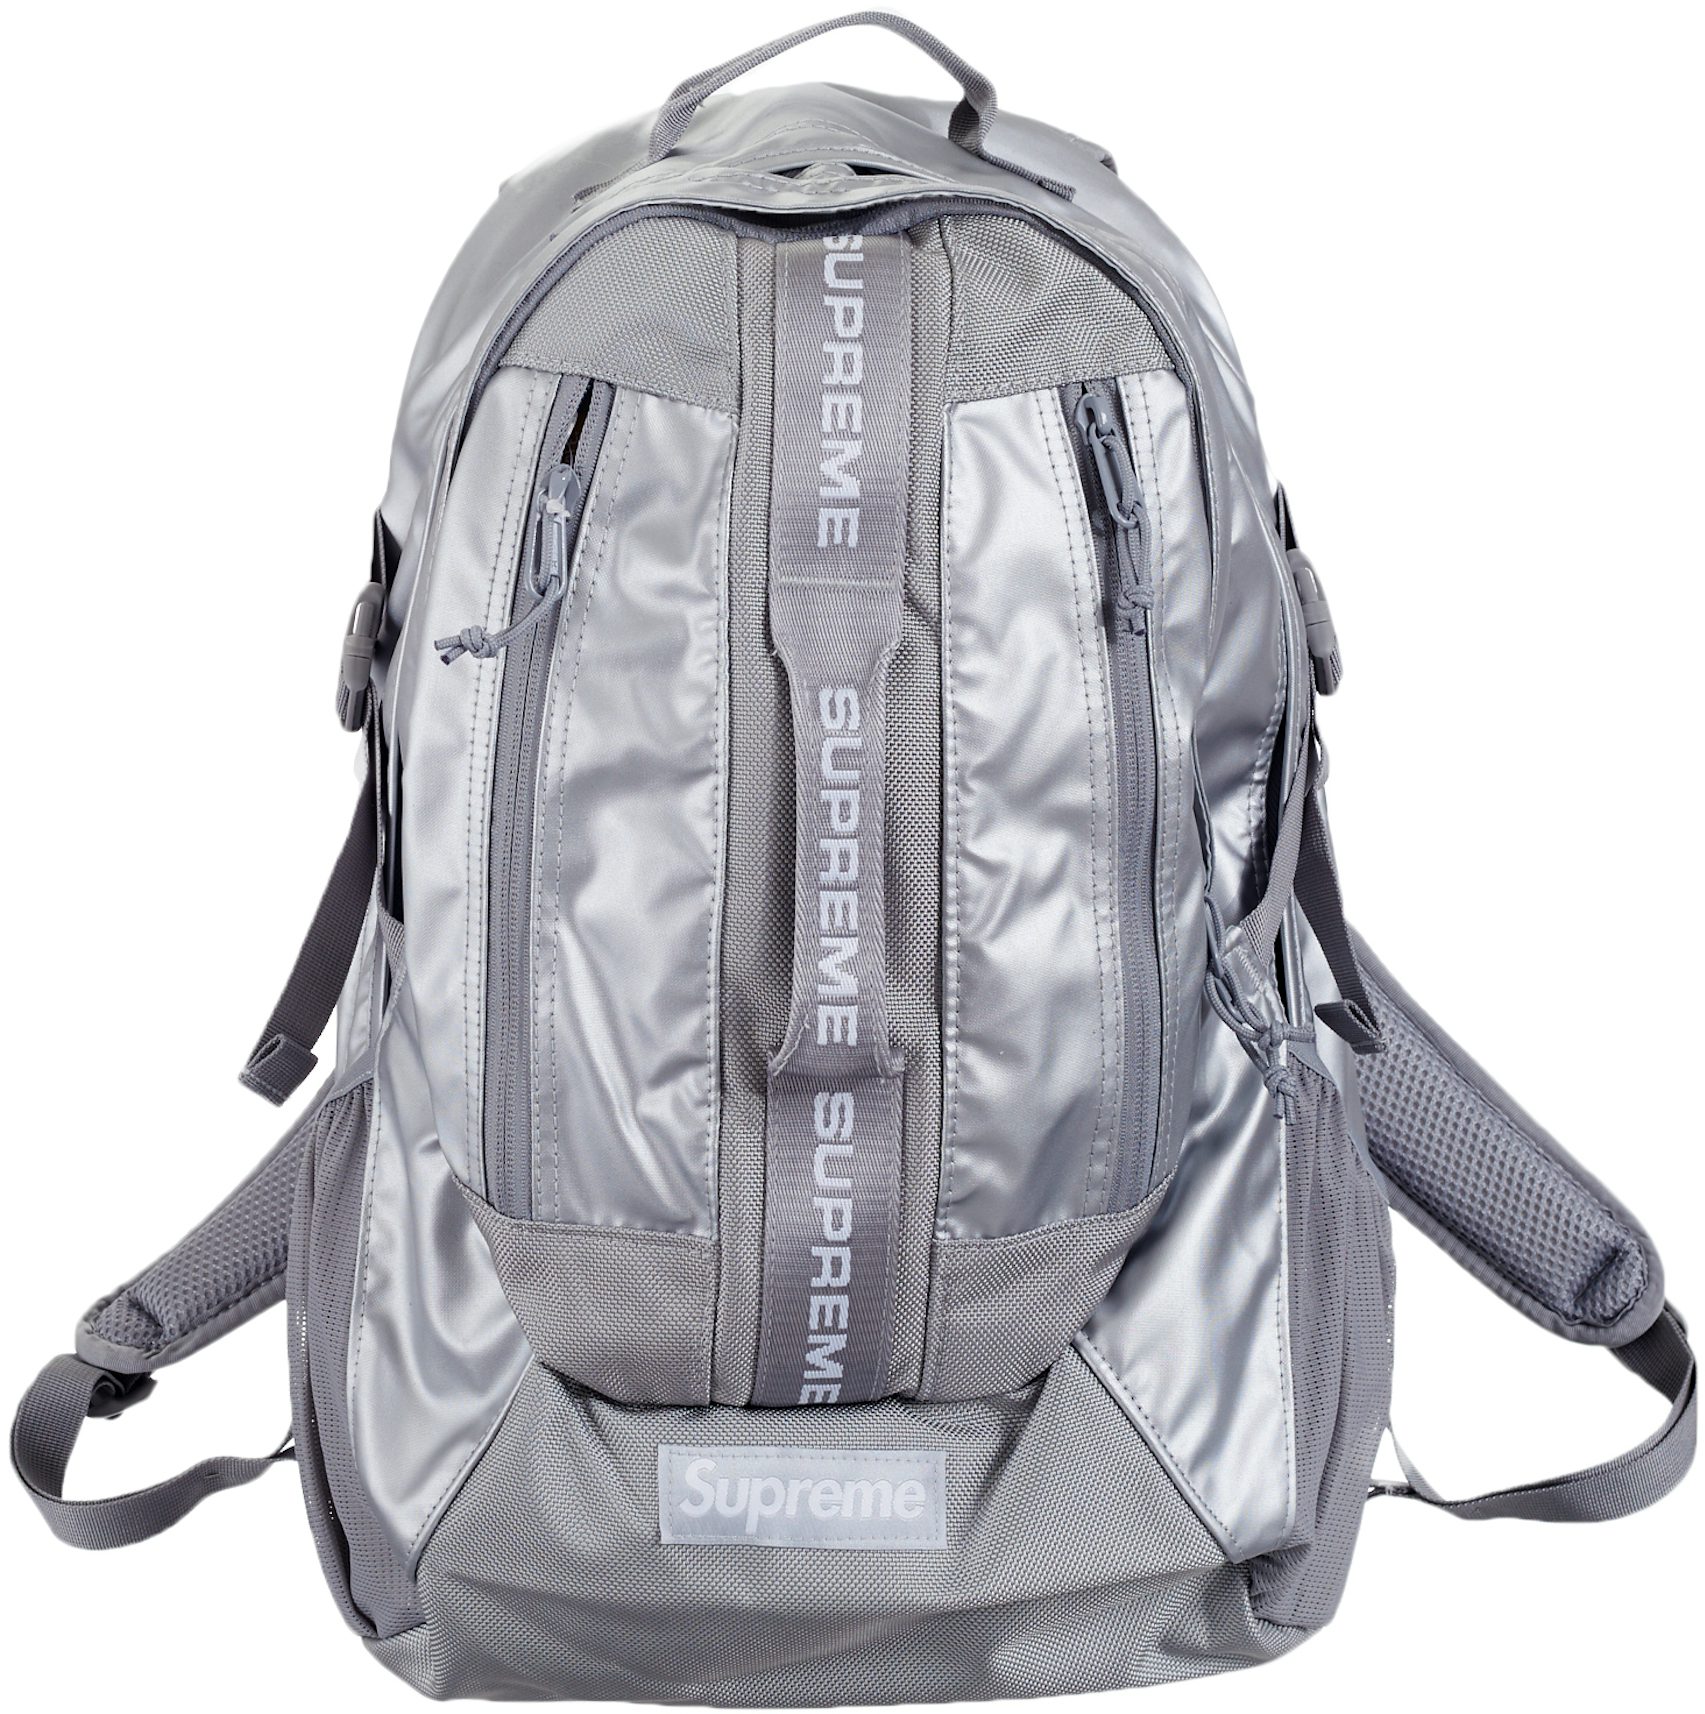 Supreme Duffle Bag (FW22) SilverSupreme Duffle Bag (FW22) Silver - OFour